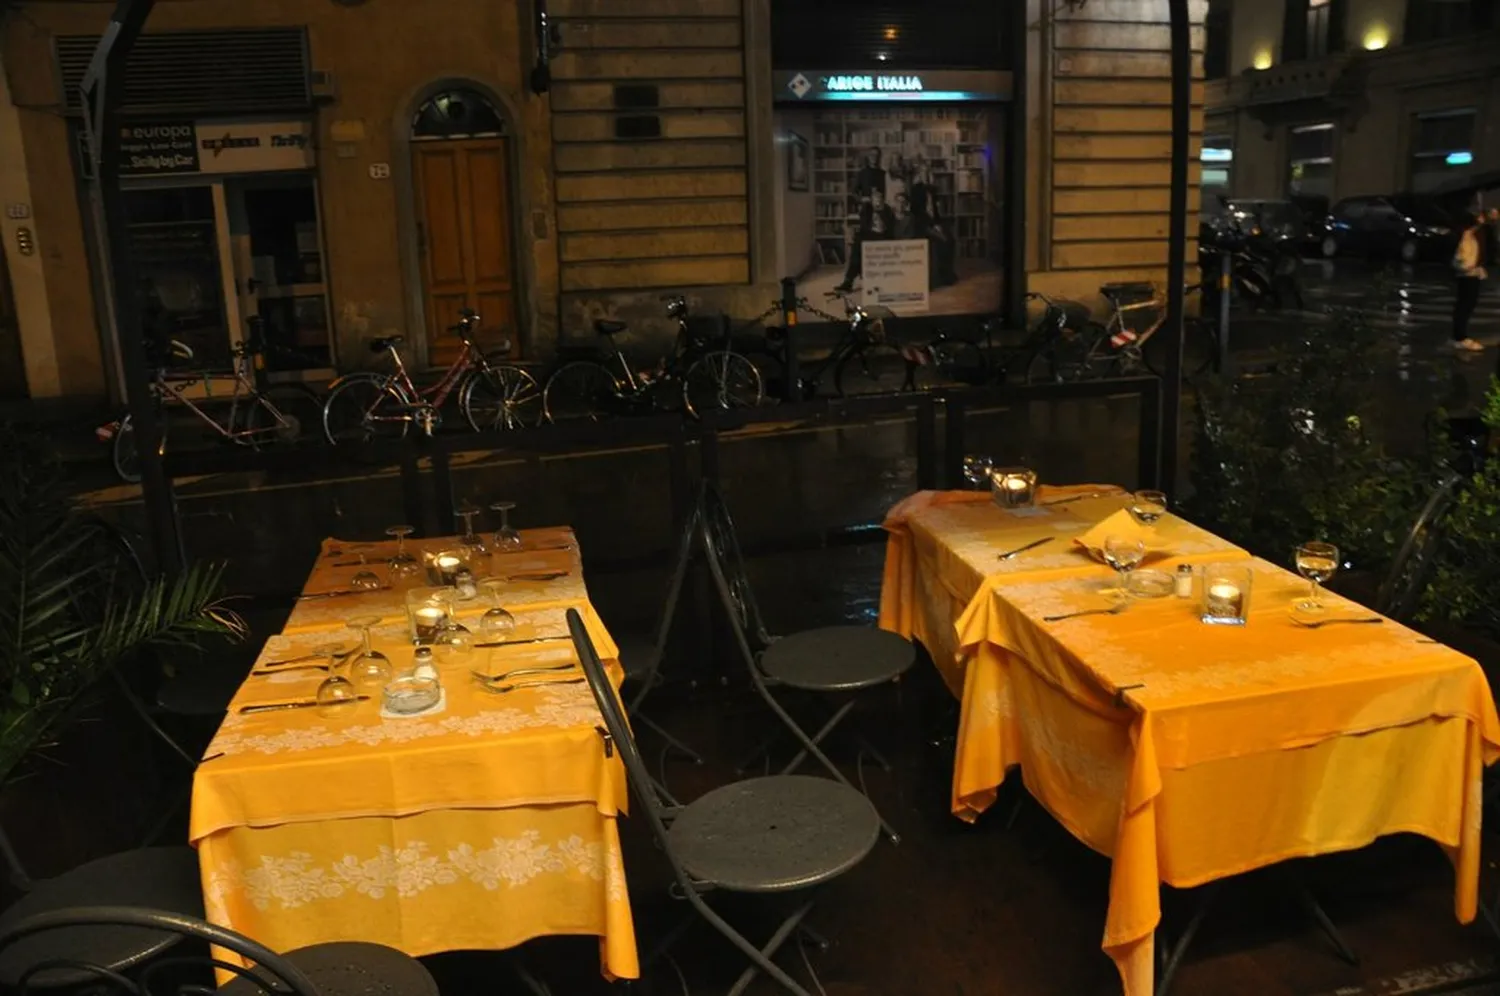 Il Profeta restaurant Florence